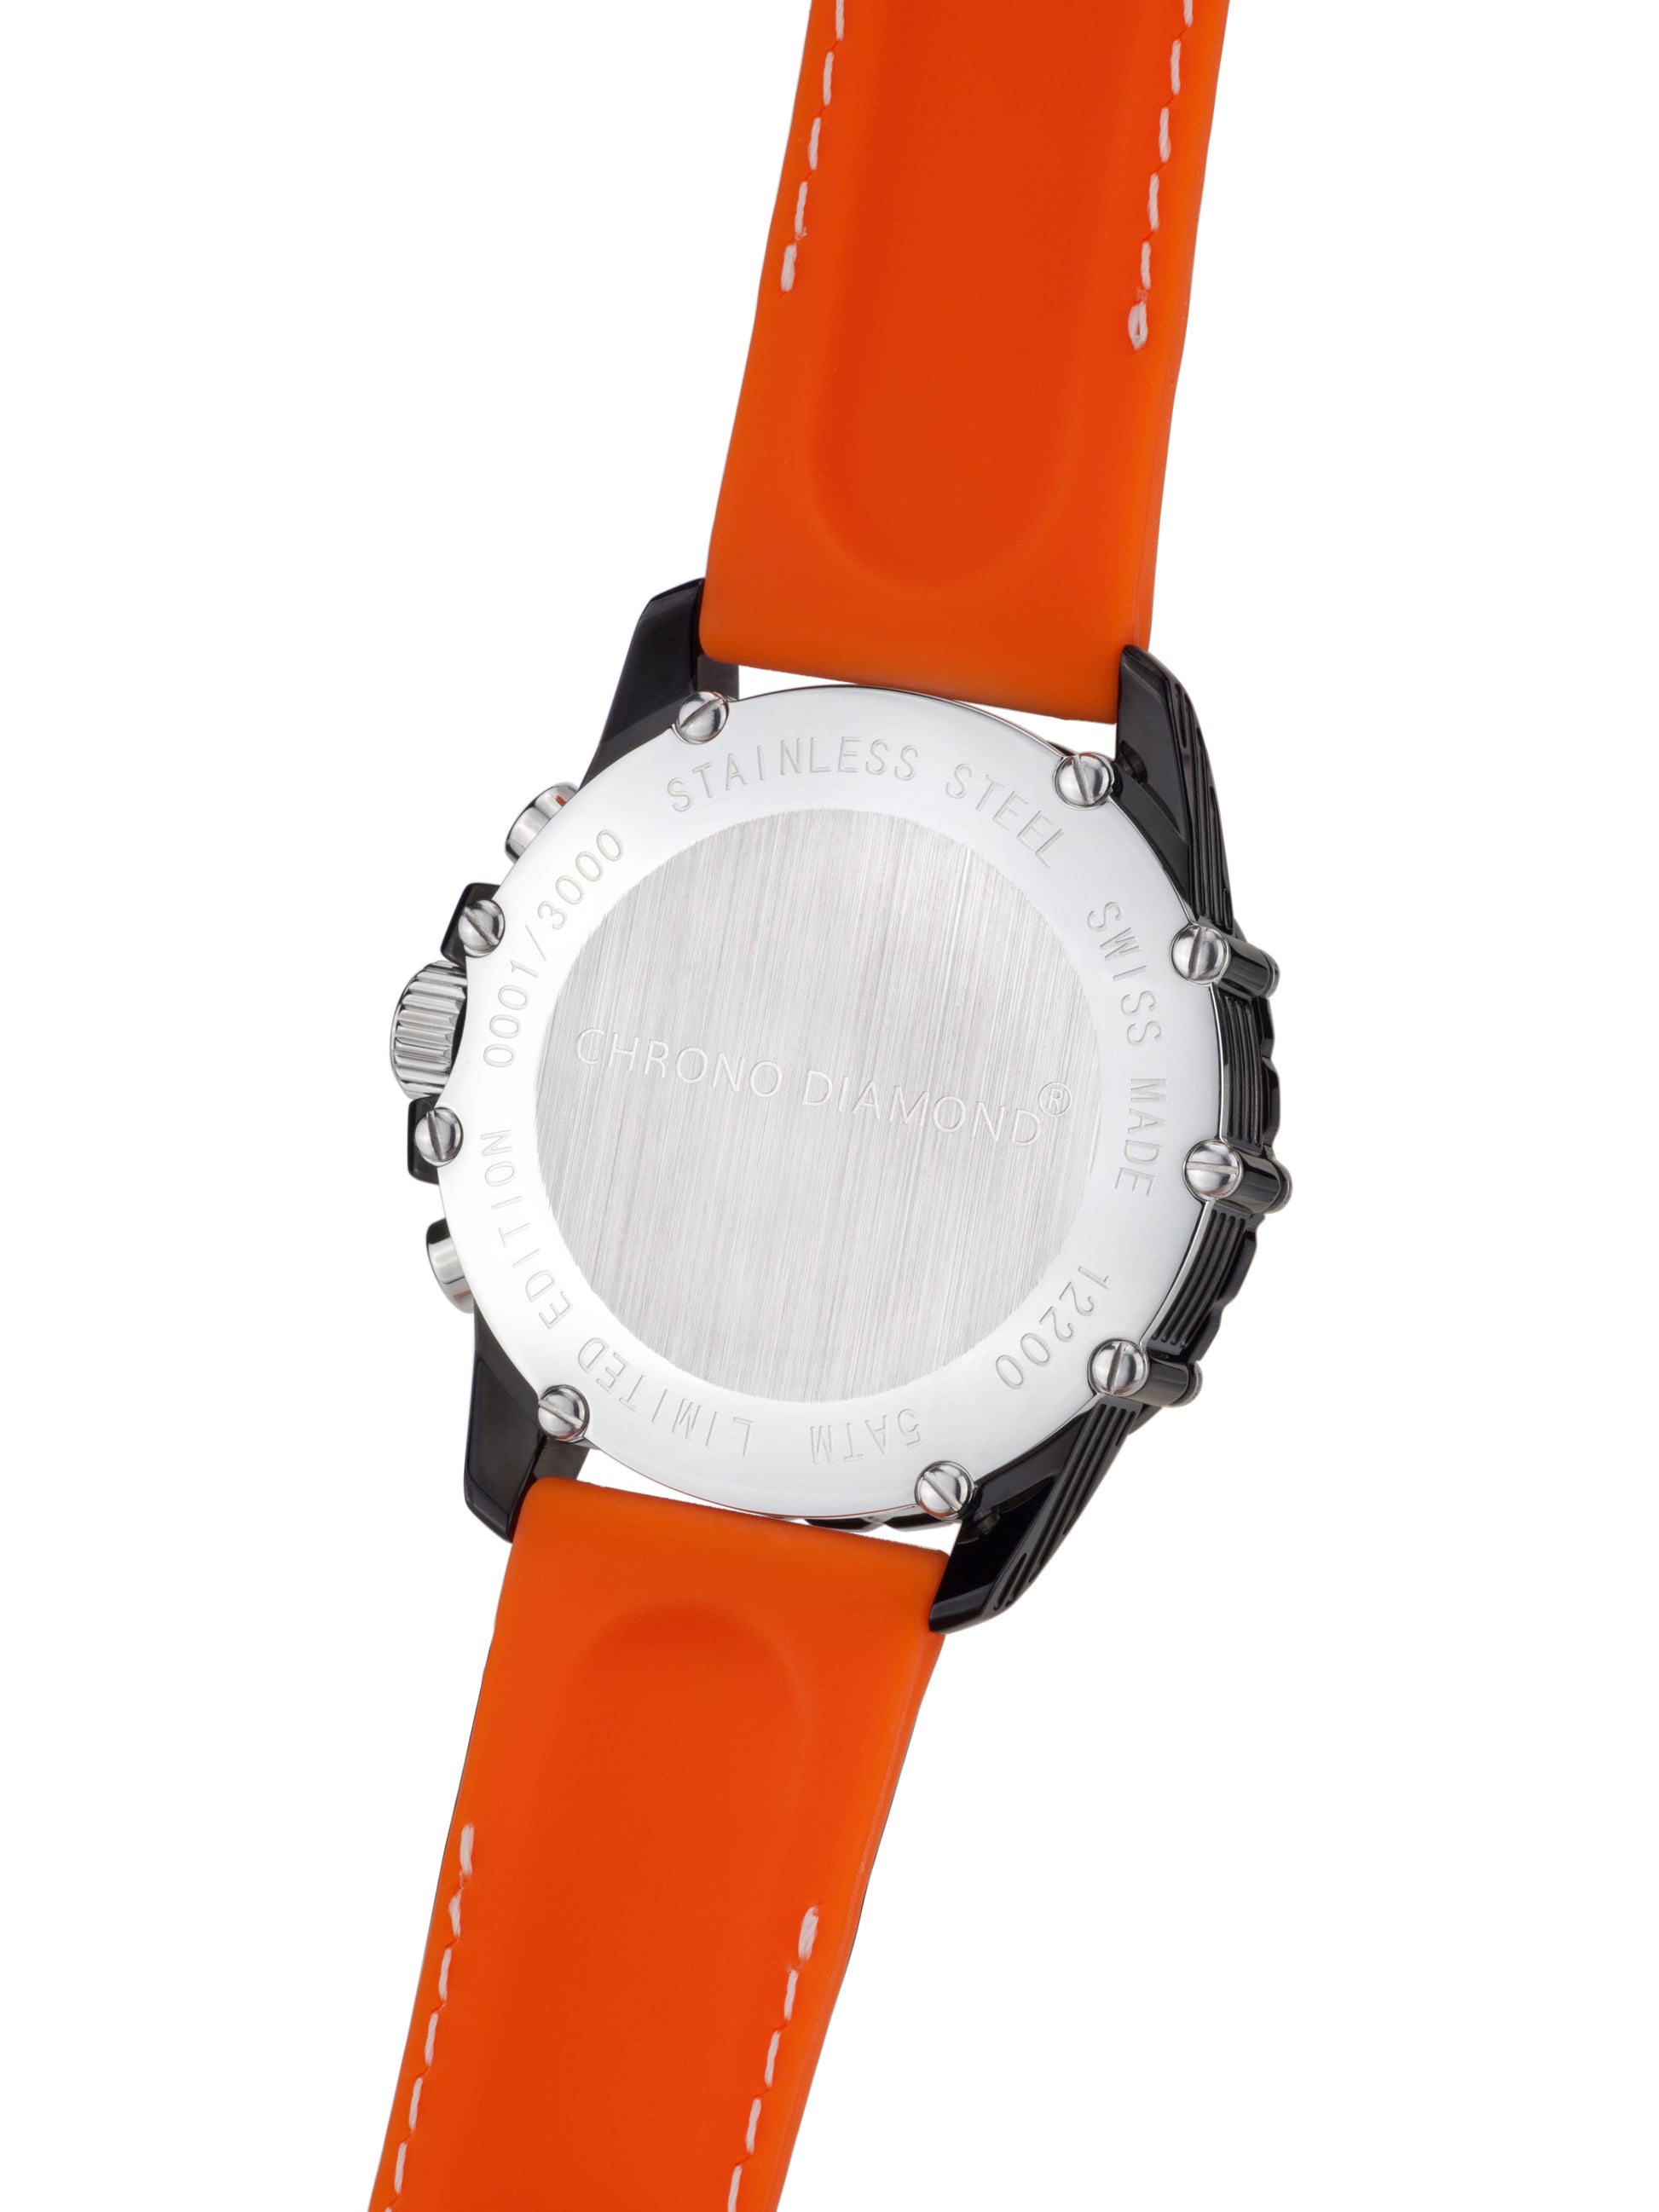 Automatic watches — Neelos — Chrono Diamond — black IP orange